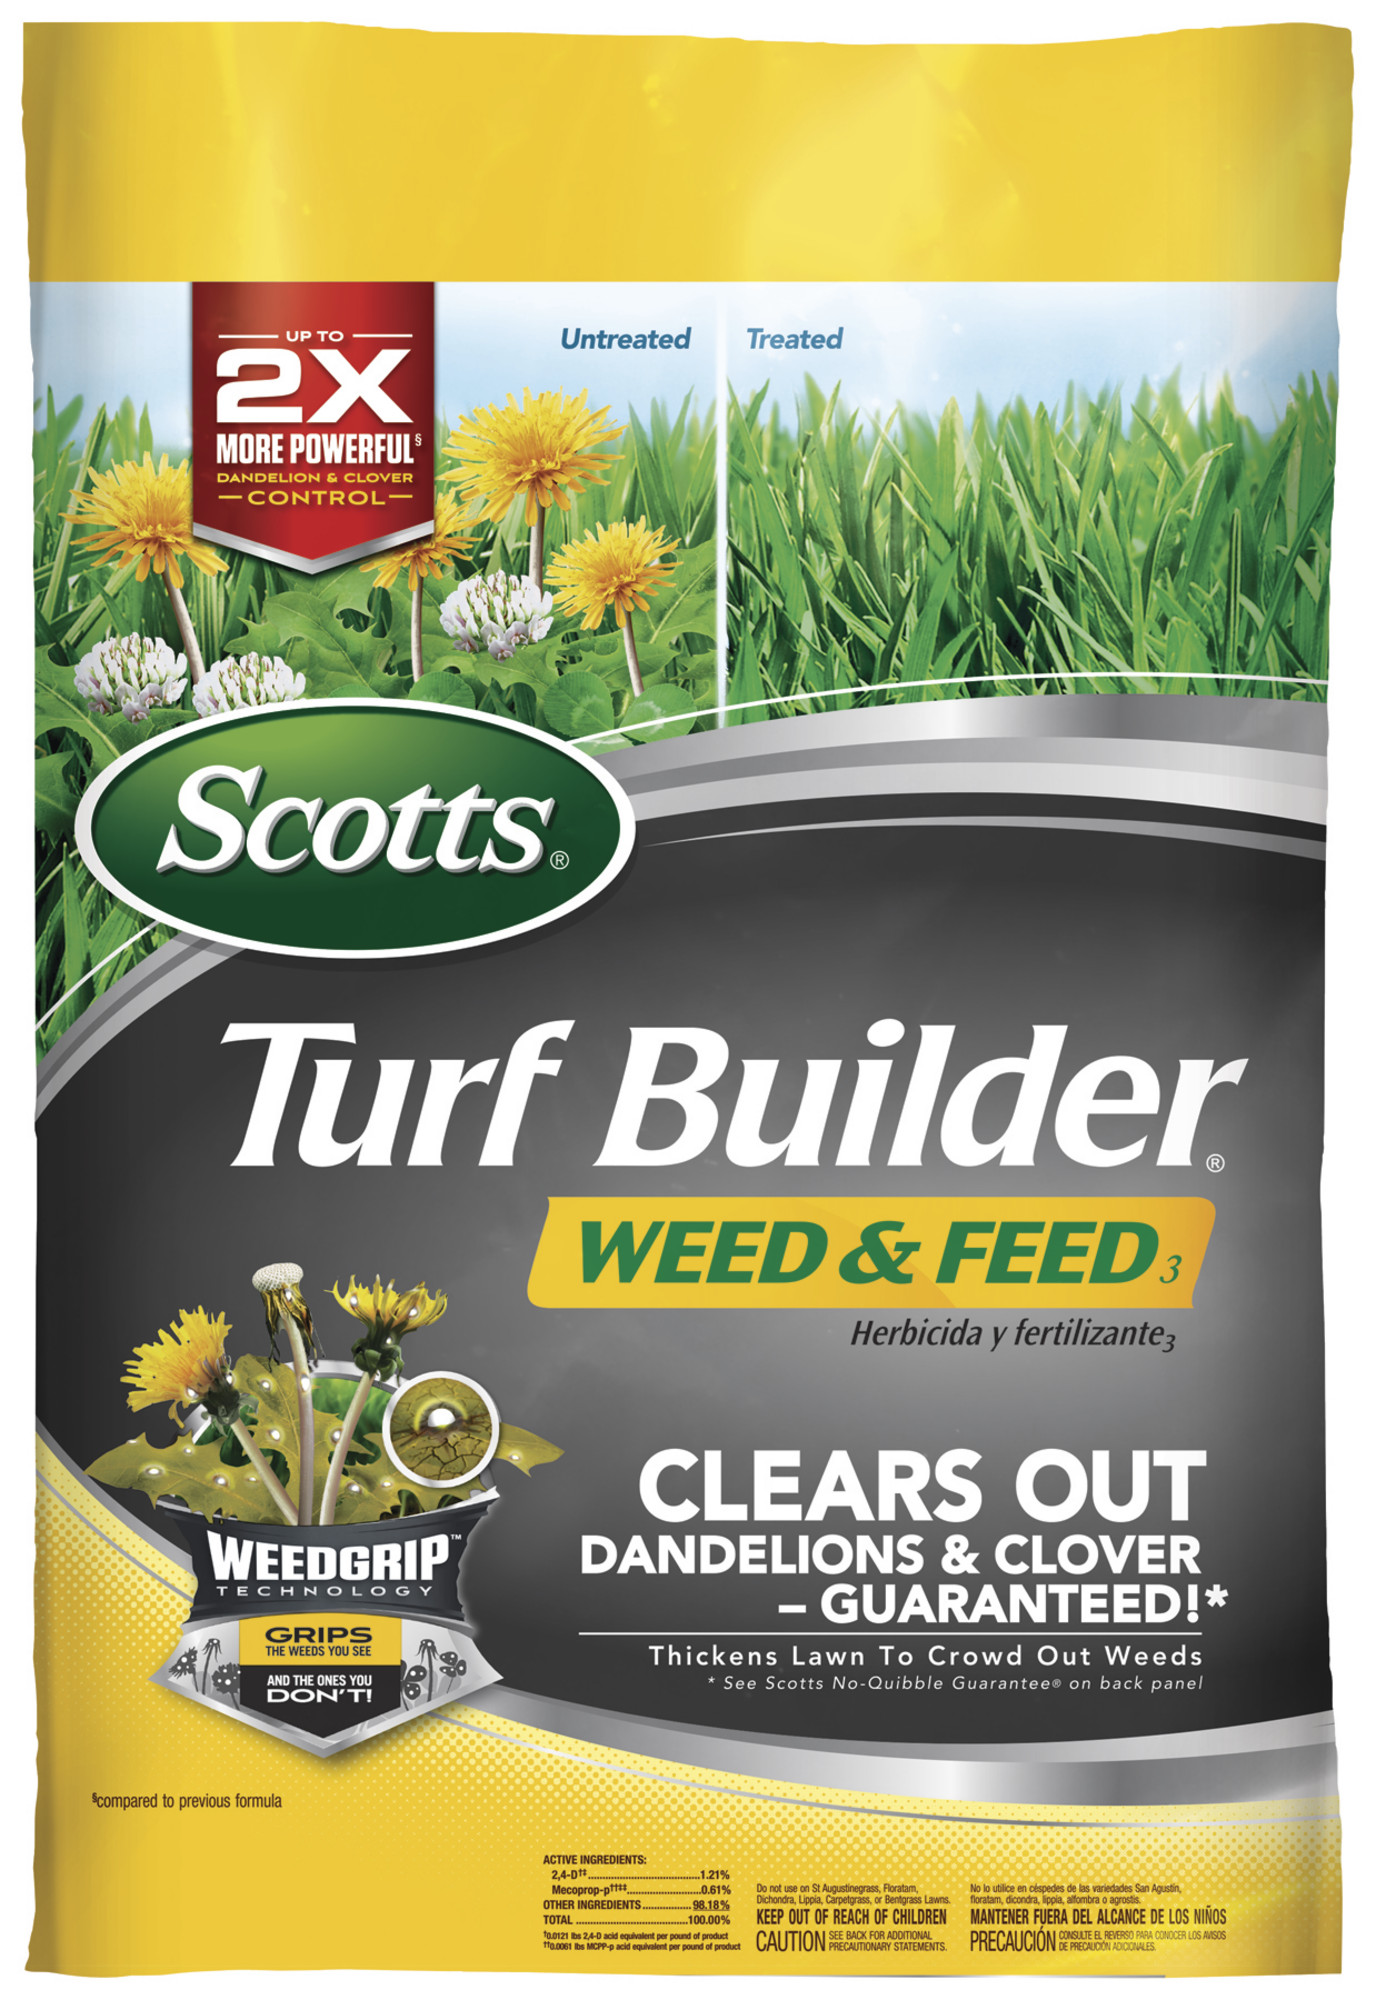 Scotts Turf Builder Weed & Feed Fertilizer (15k sq ft) $40.00